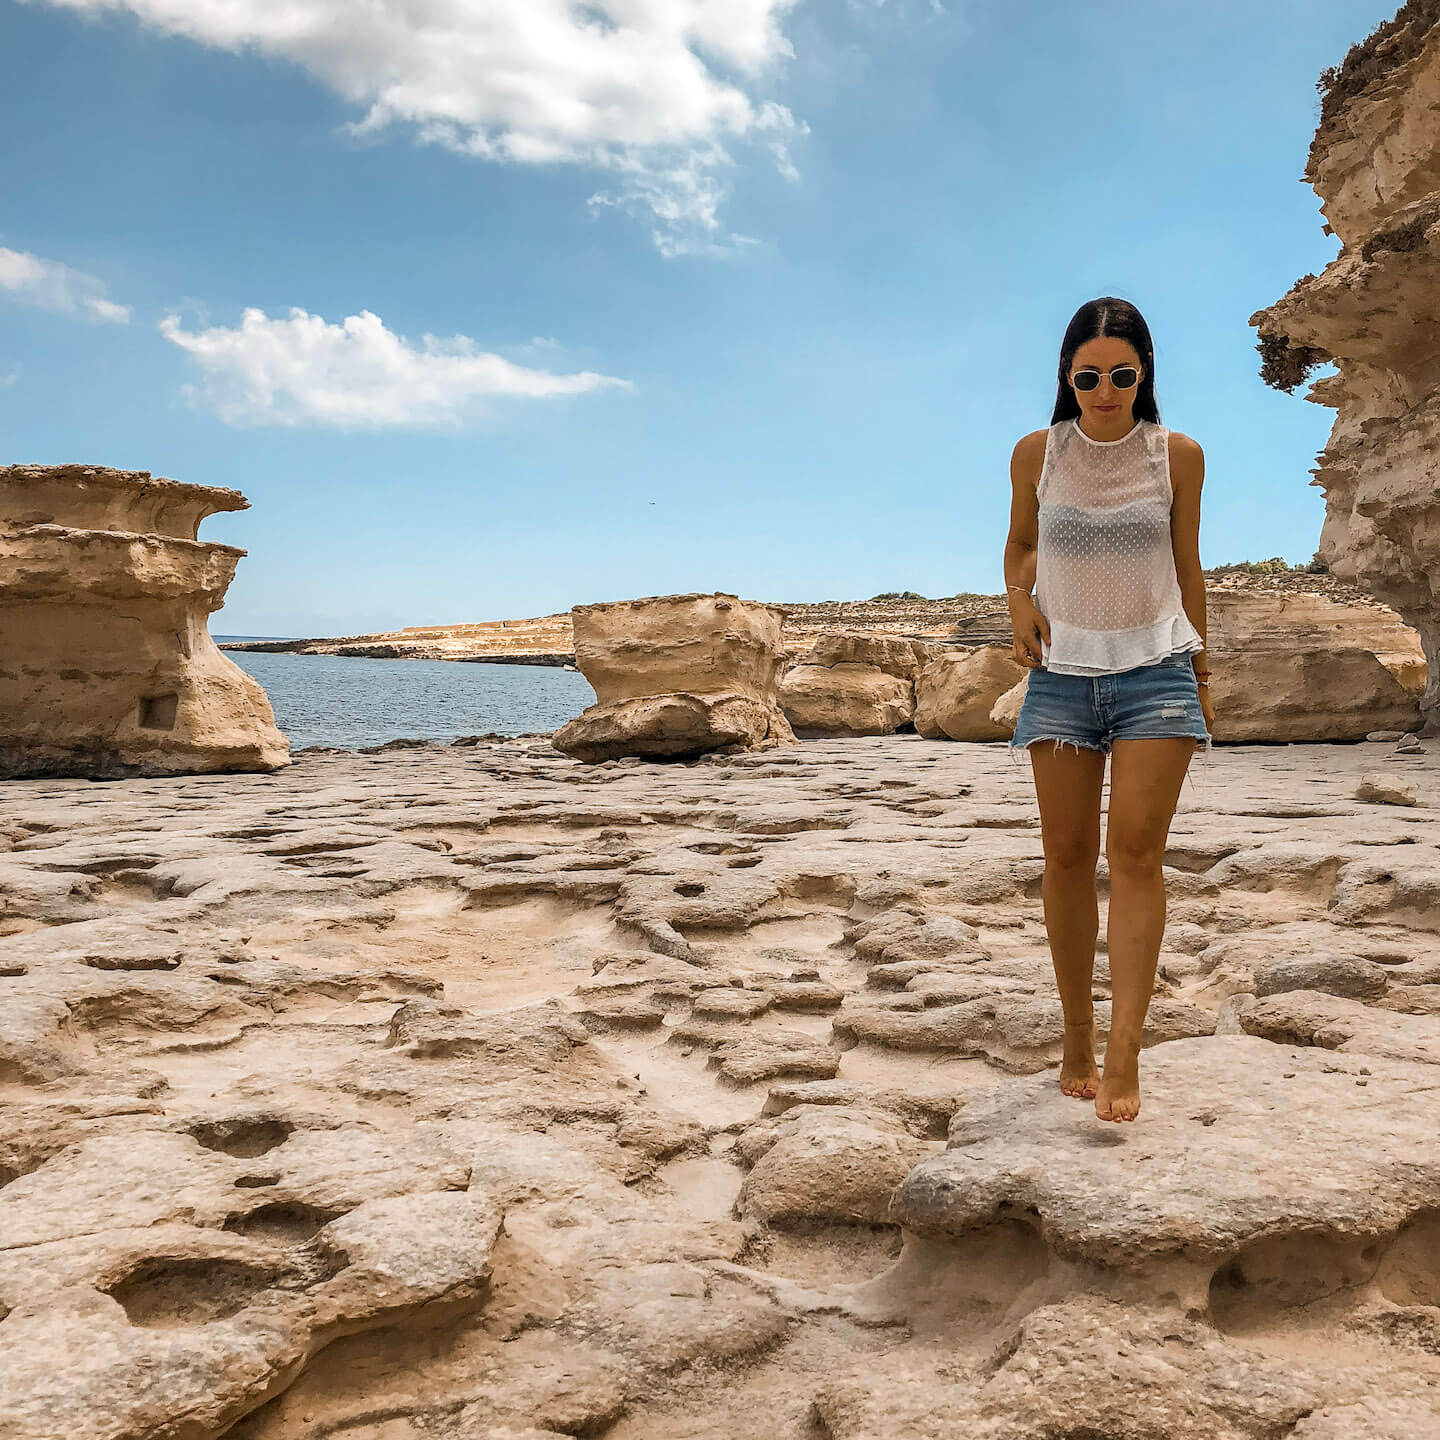 Stella walking on rocky limestone beach